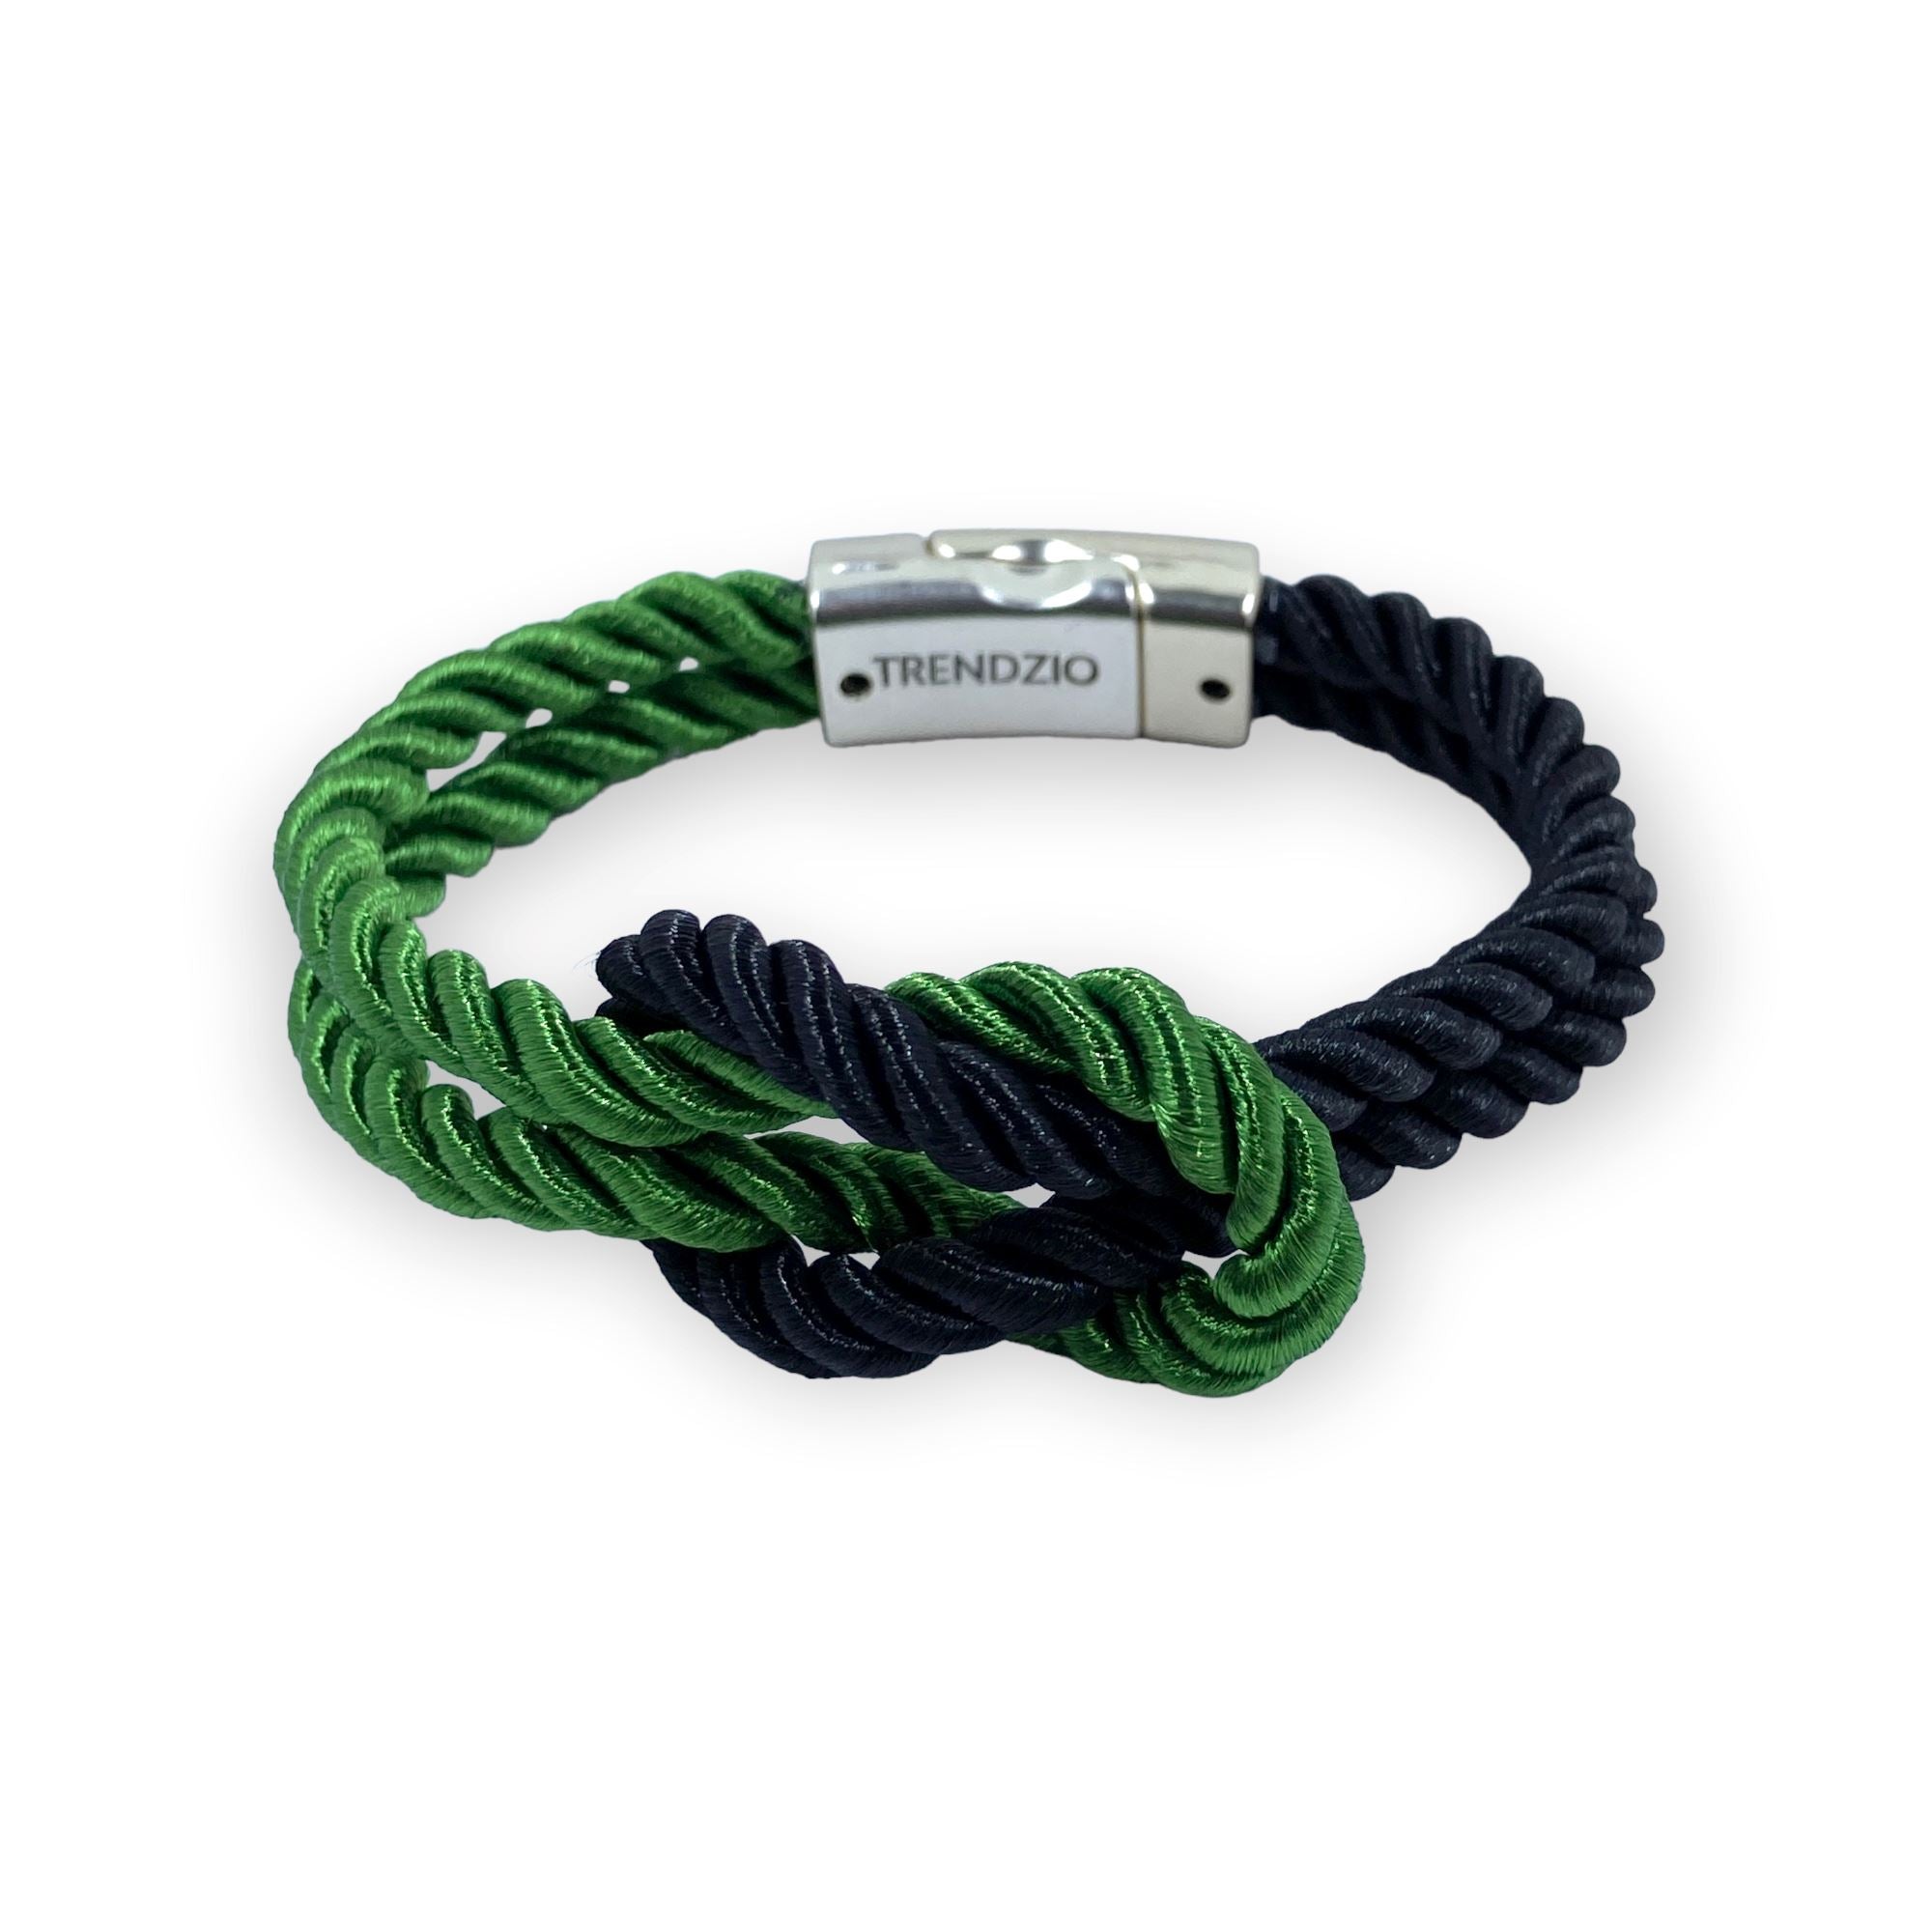 The Original Love Knot Satin Rope Bracelet- Black and Green Bracelets Trendzio Black and Green 